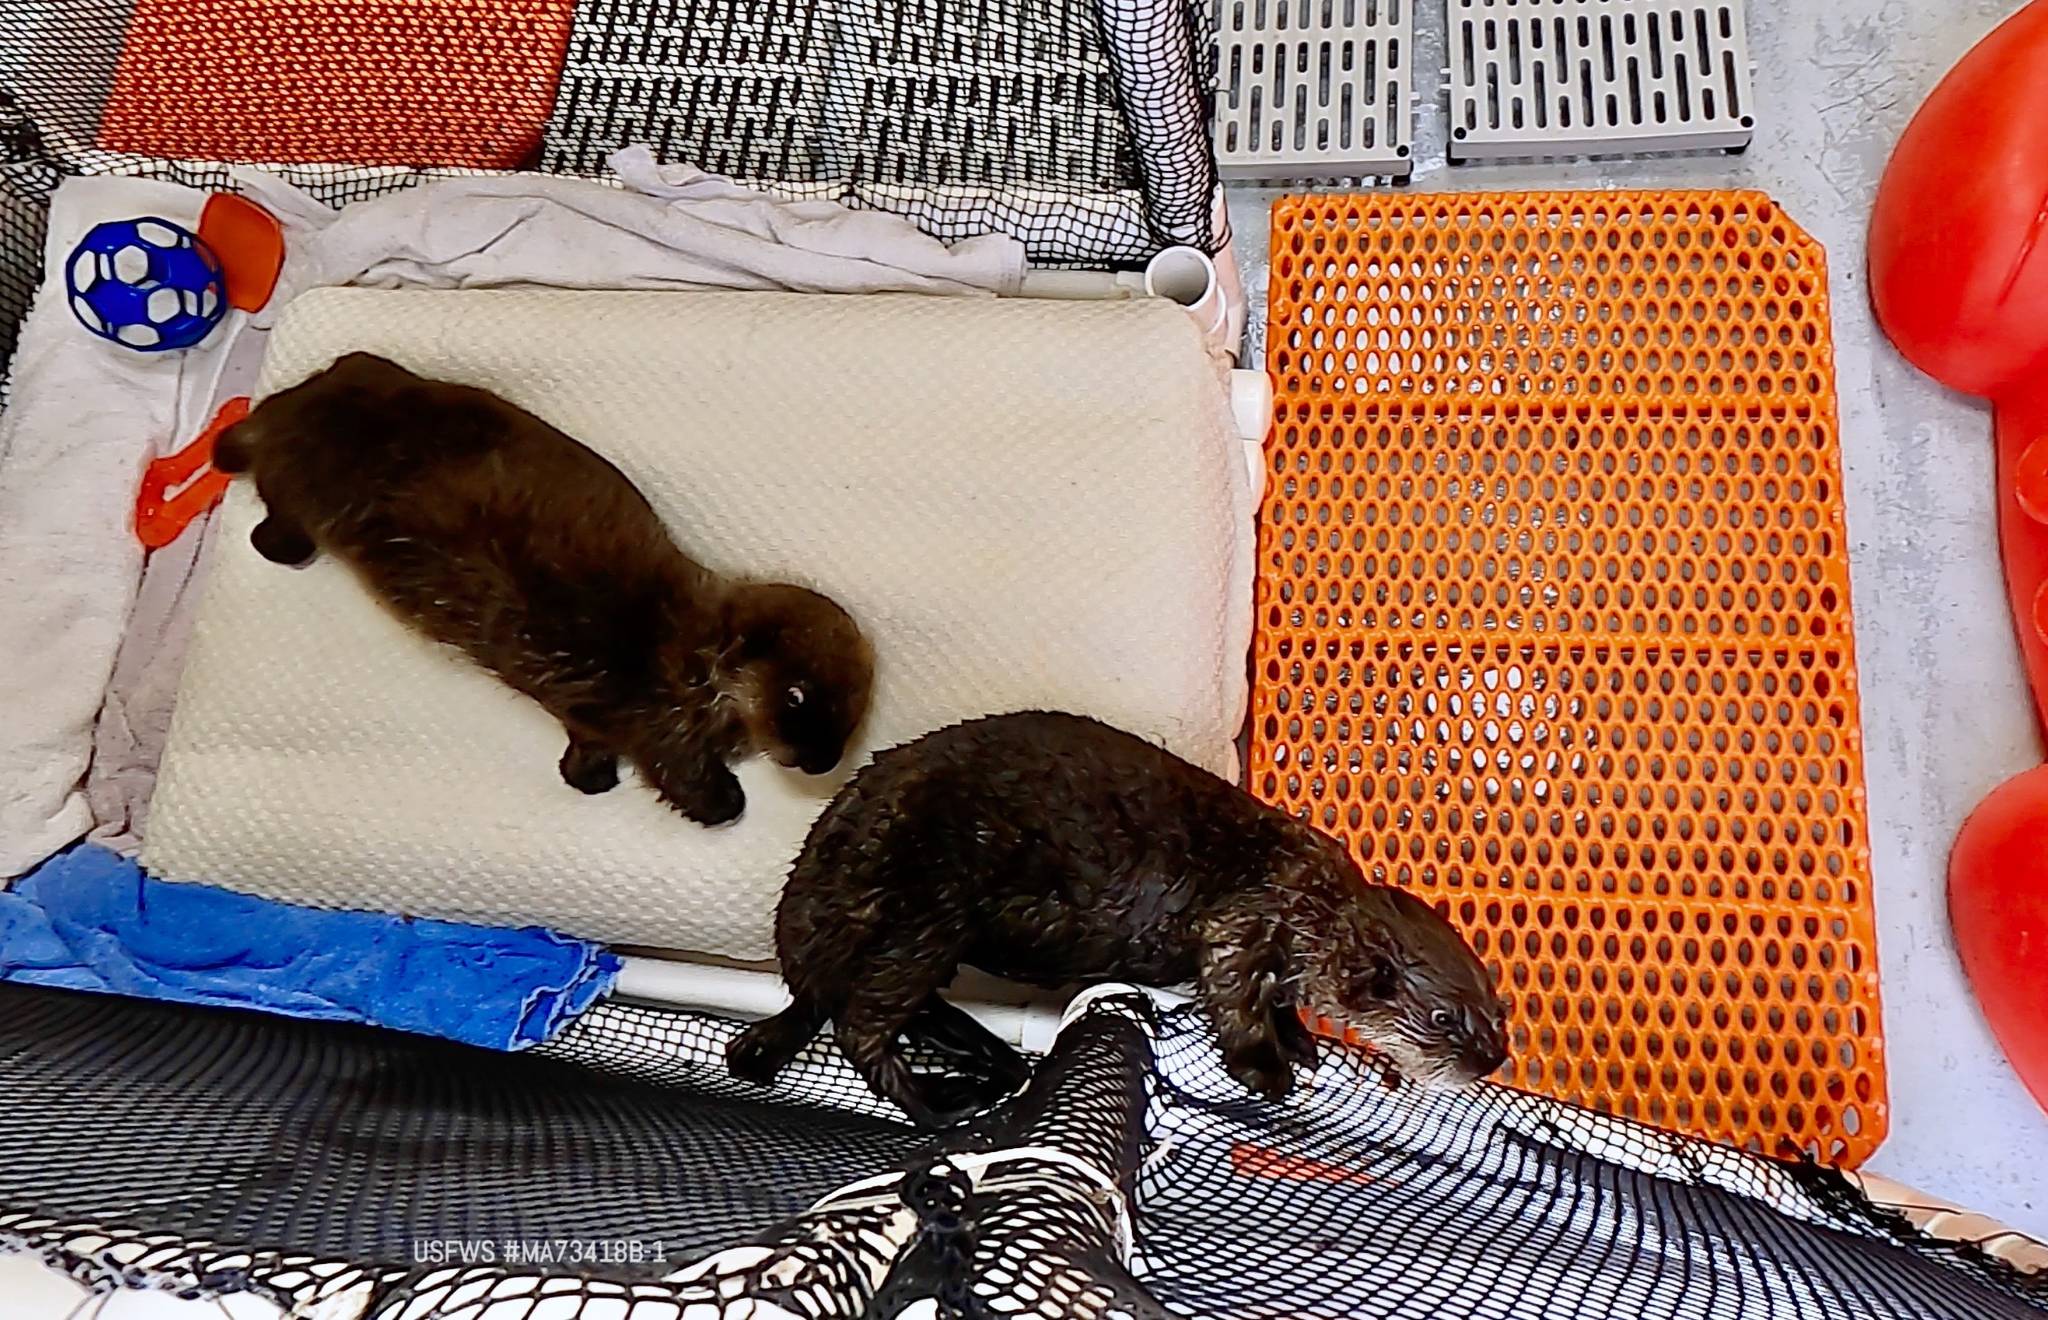 Sea otter pups Juniper (left) and Pushki meet each other for the first time at the Alaska SeaLife Center in Seward, Alaska. (Photo courtesy Alaska SeaLife Center)